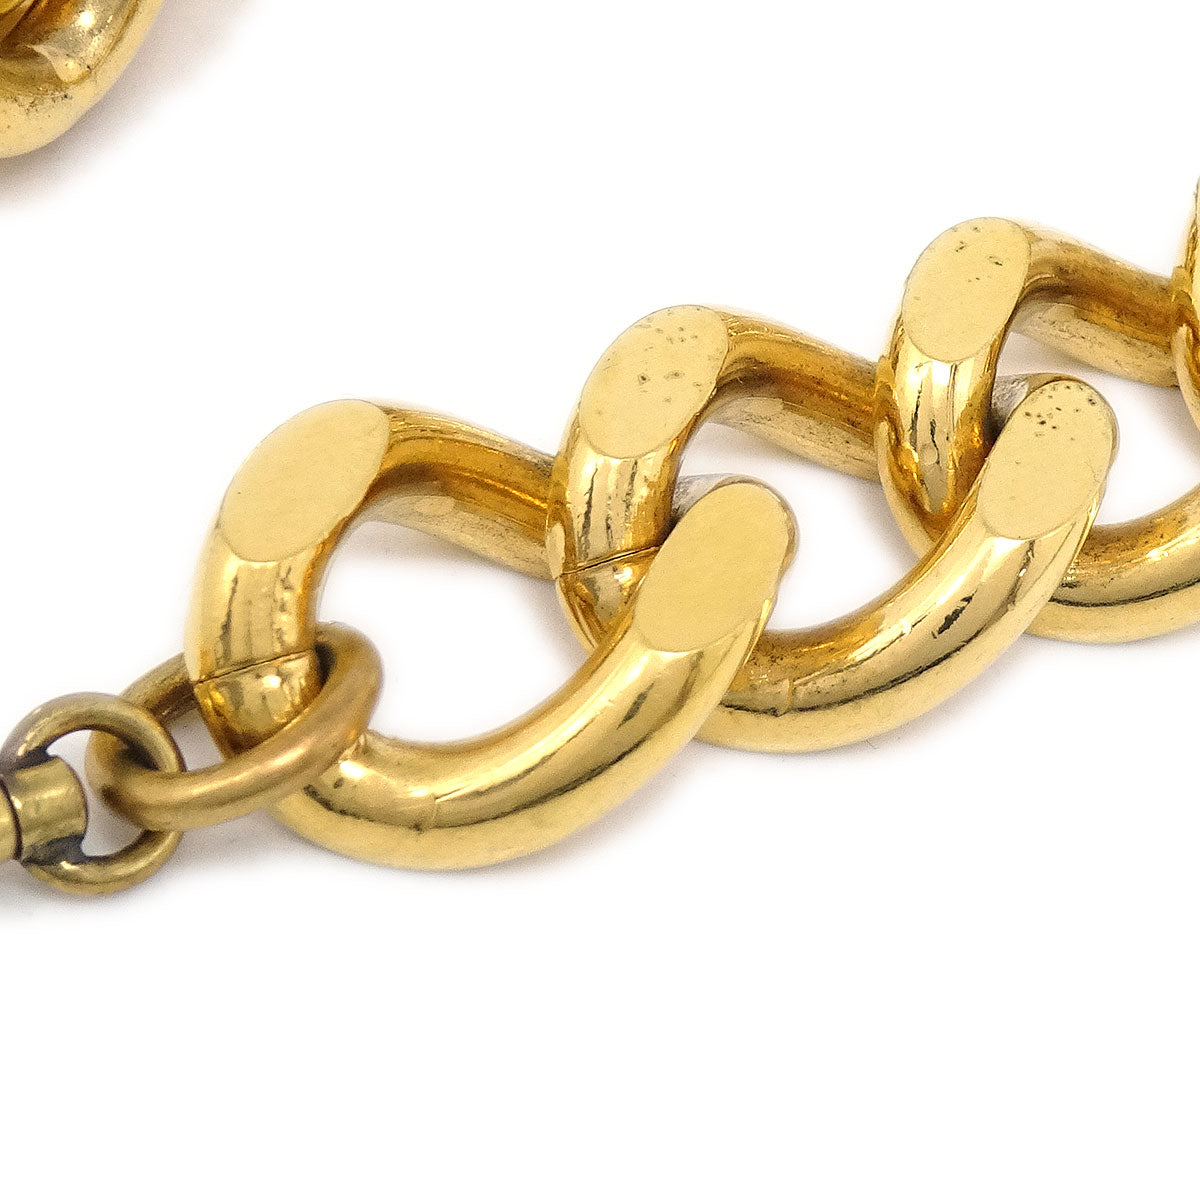 Chanel Gold Chain Belt 26642